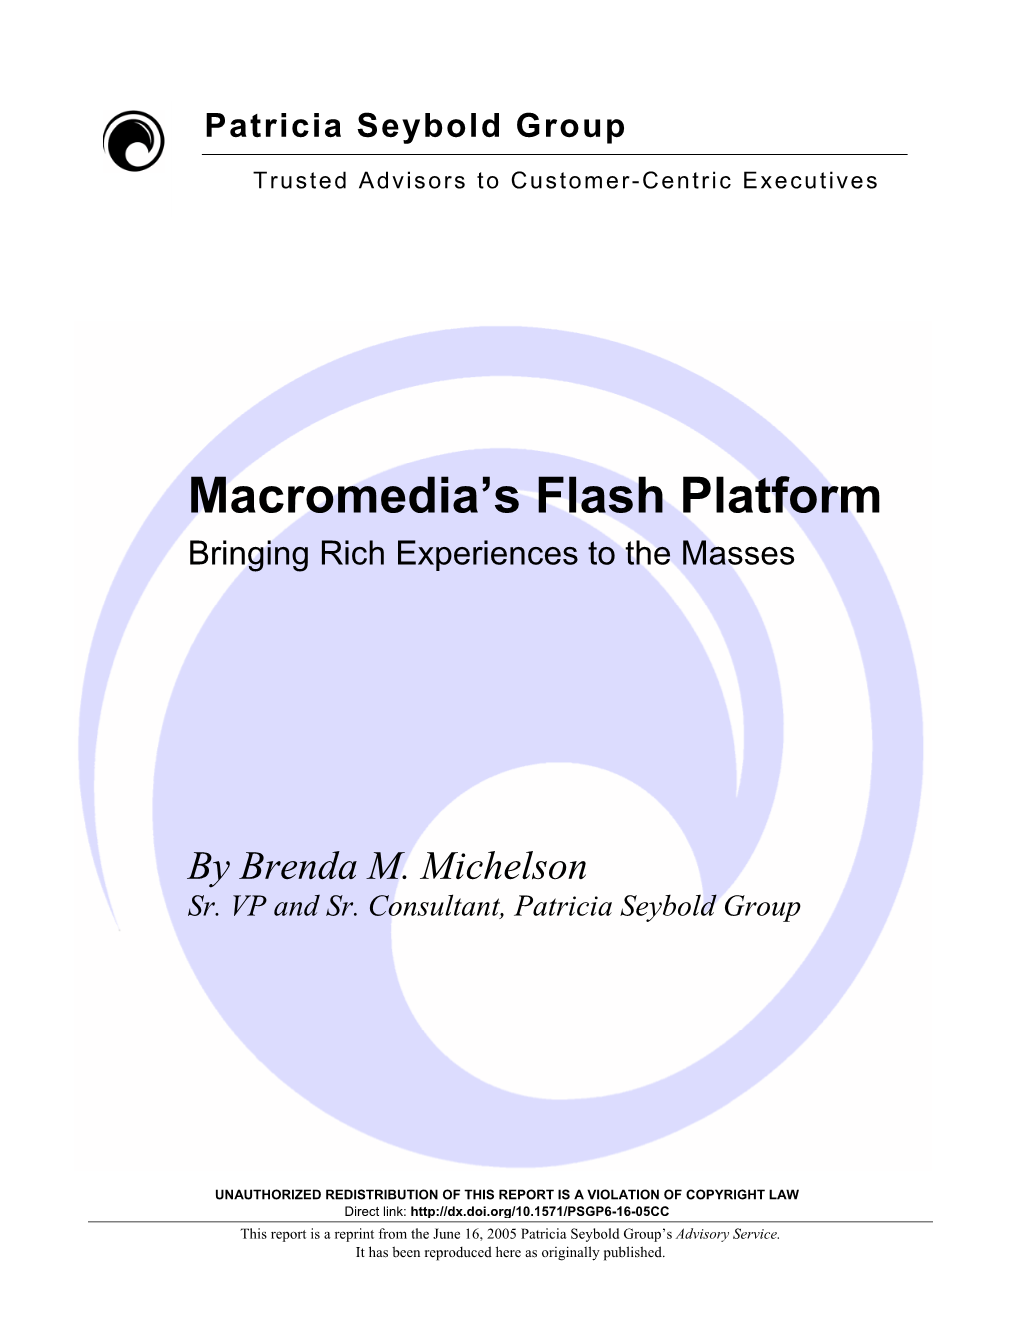 Macromedia's Flash Platform